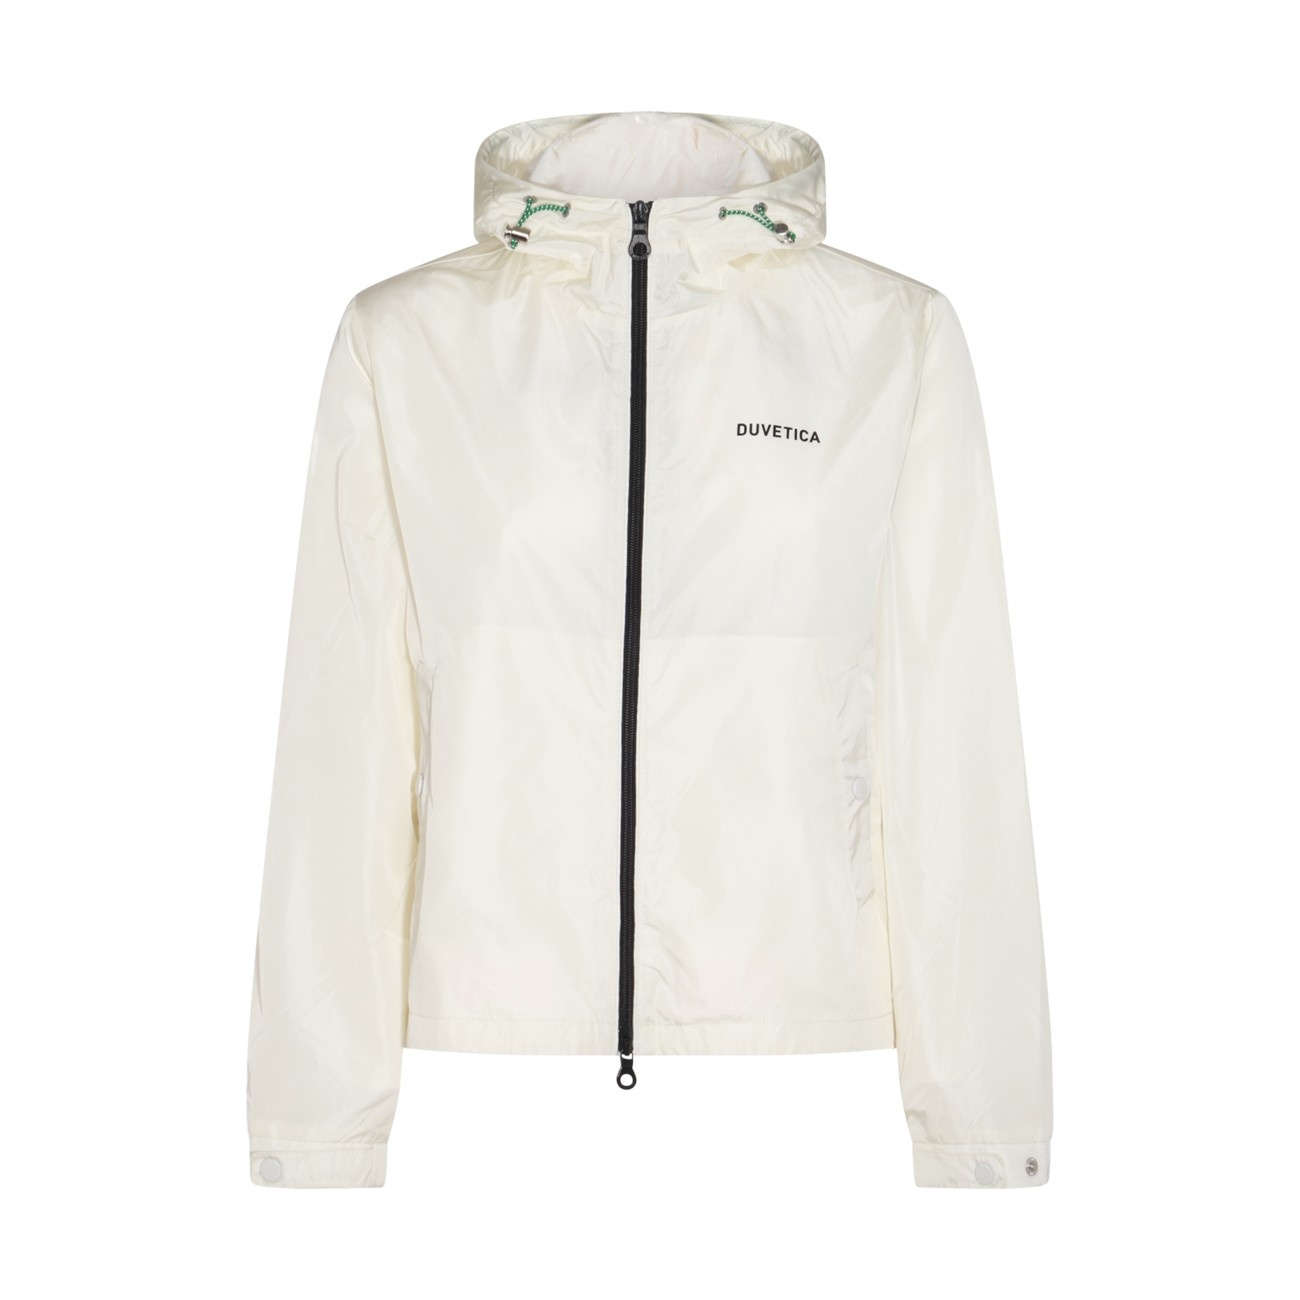 white casual jacket - 1